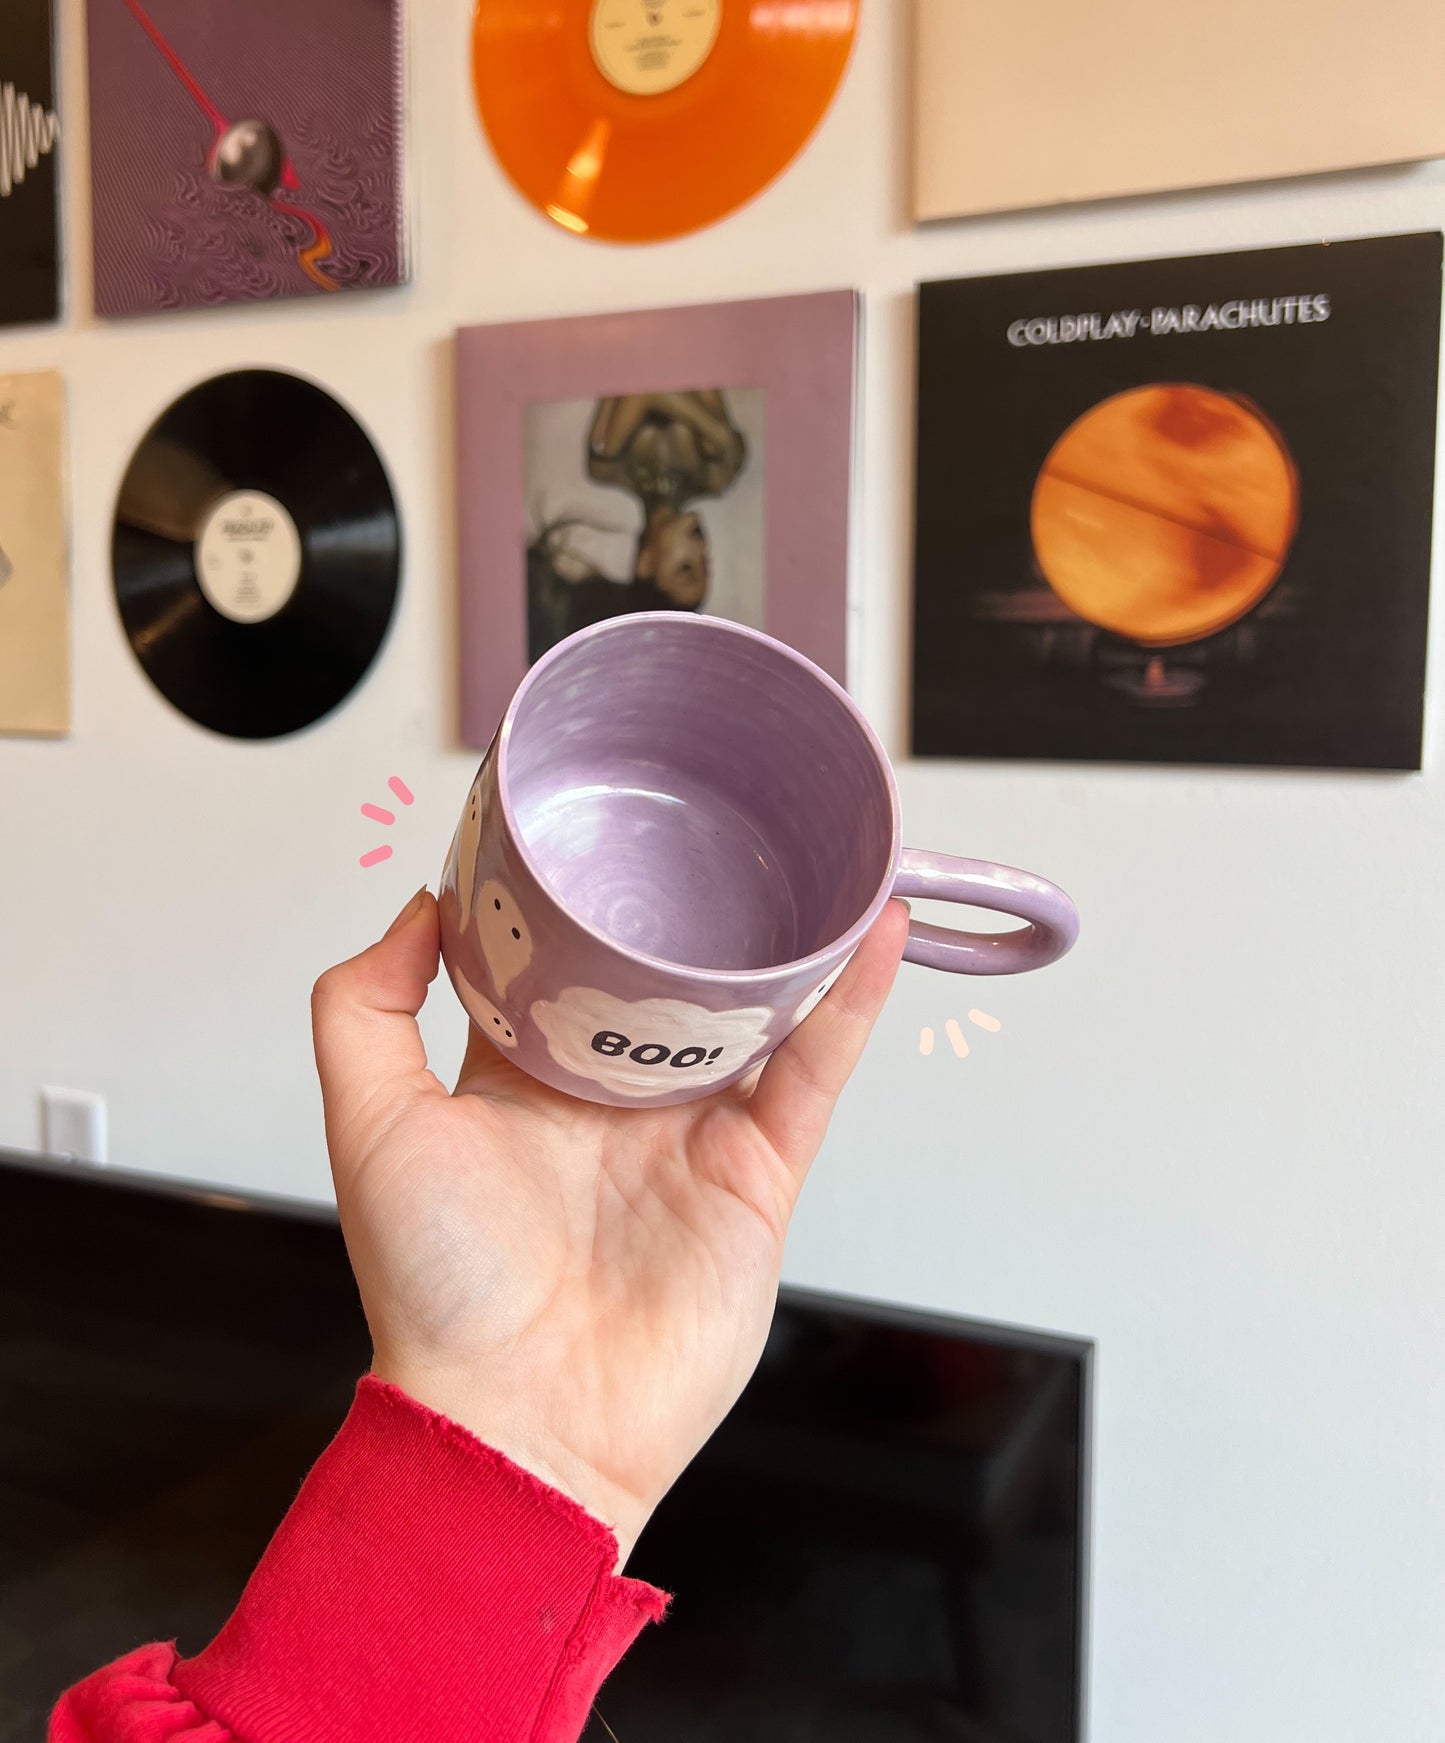 Lilac ghostie mug